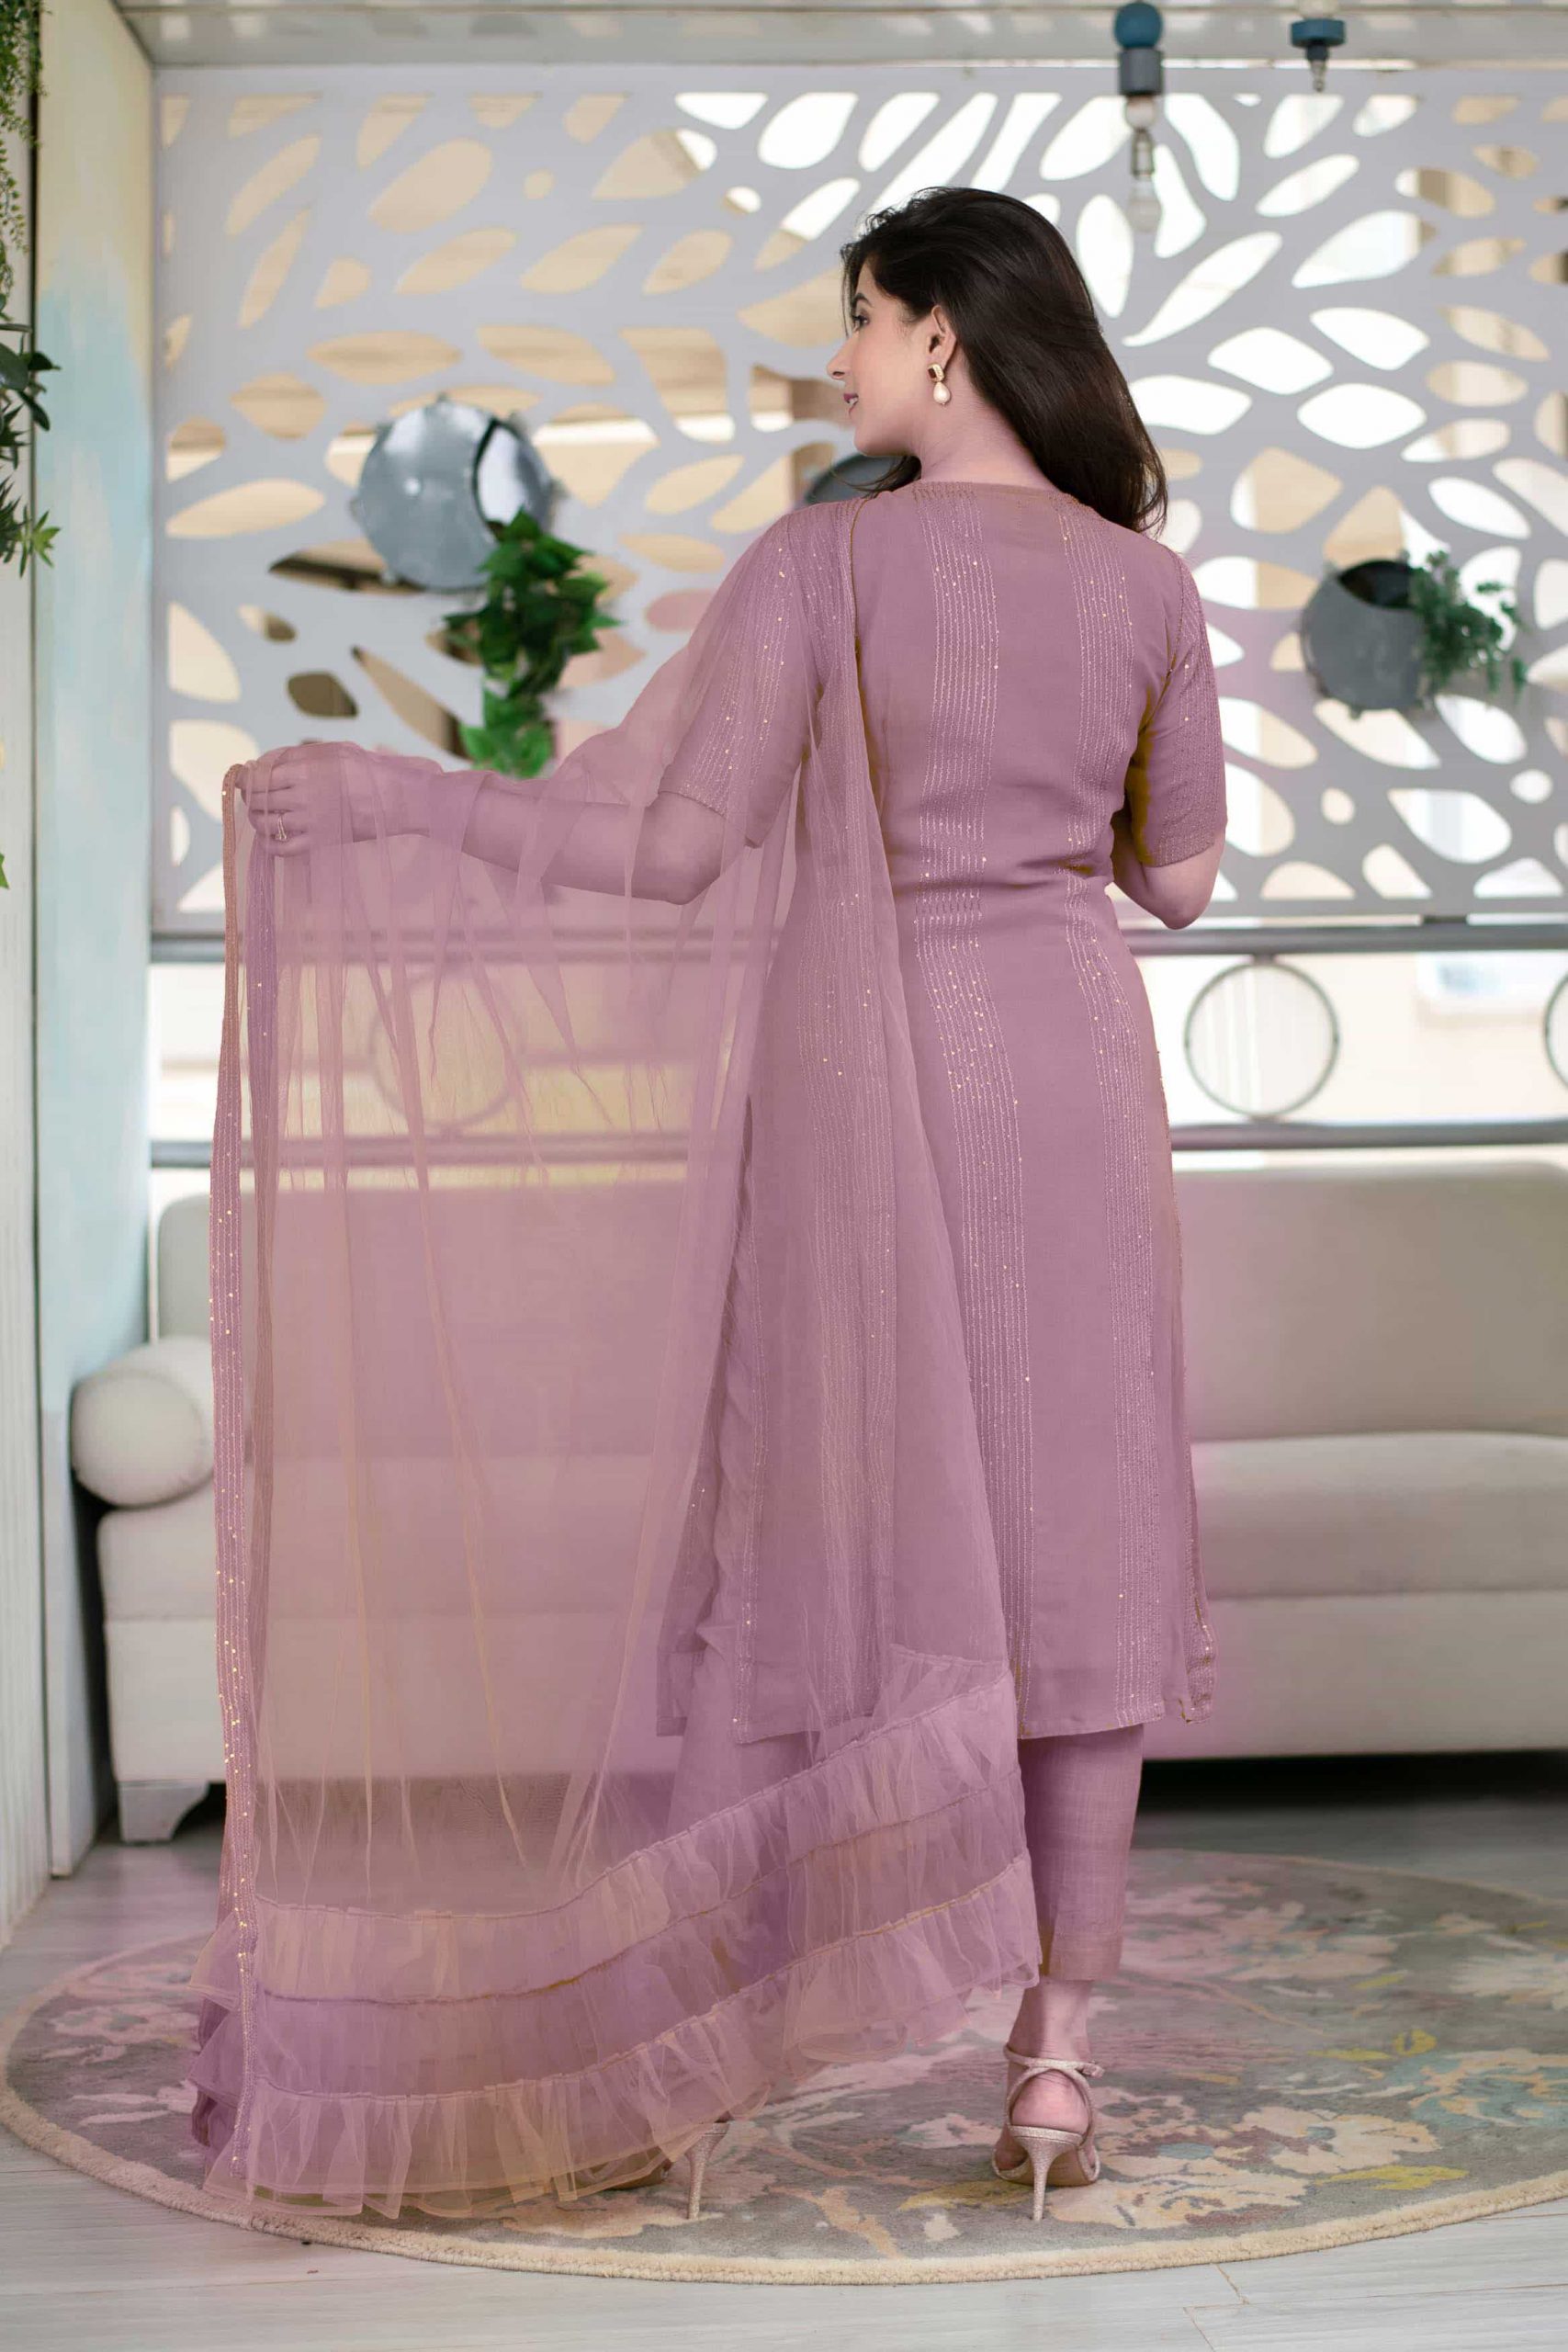 Exclusive Light Purple Lace And Latkan Anarkali Suit With Dupatta